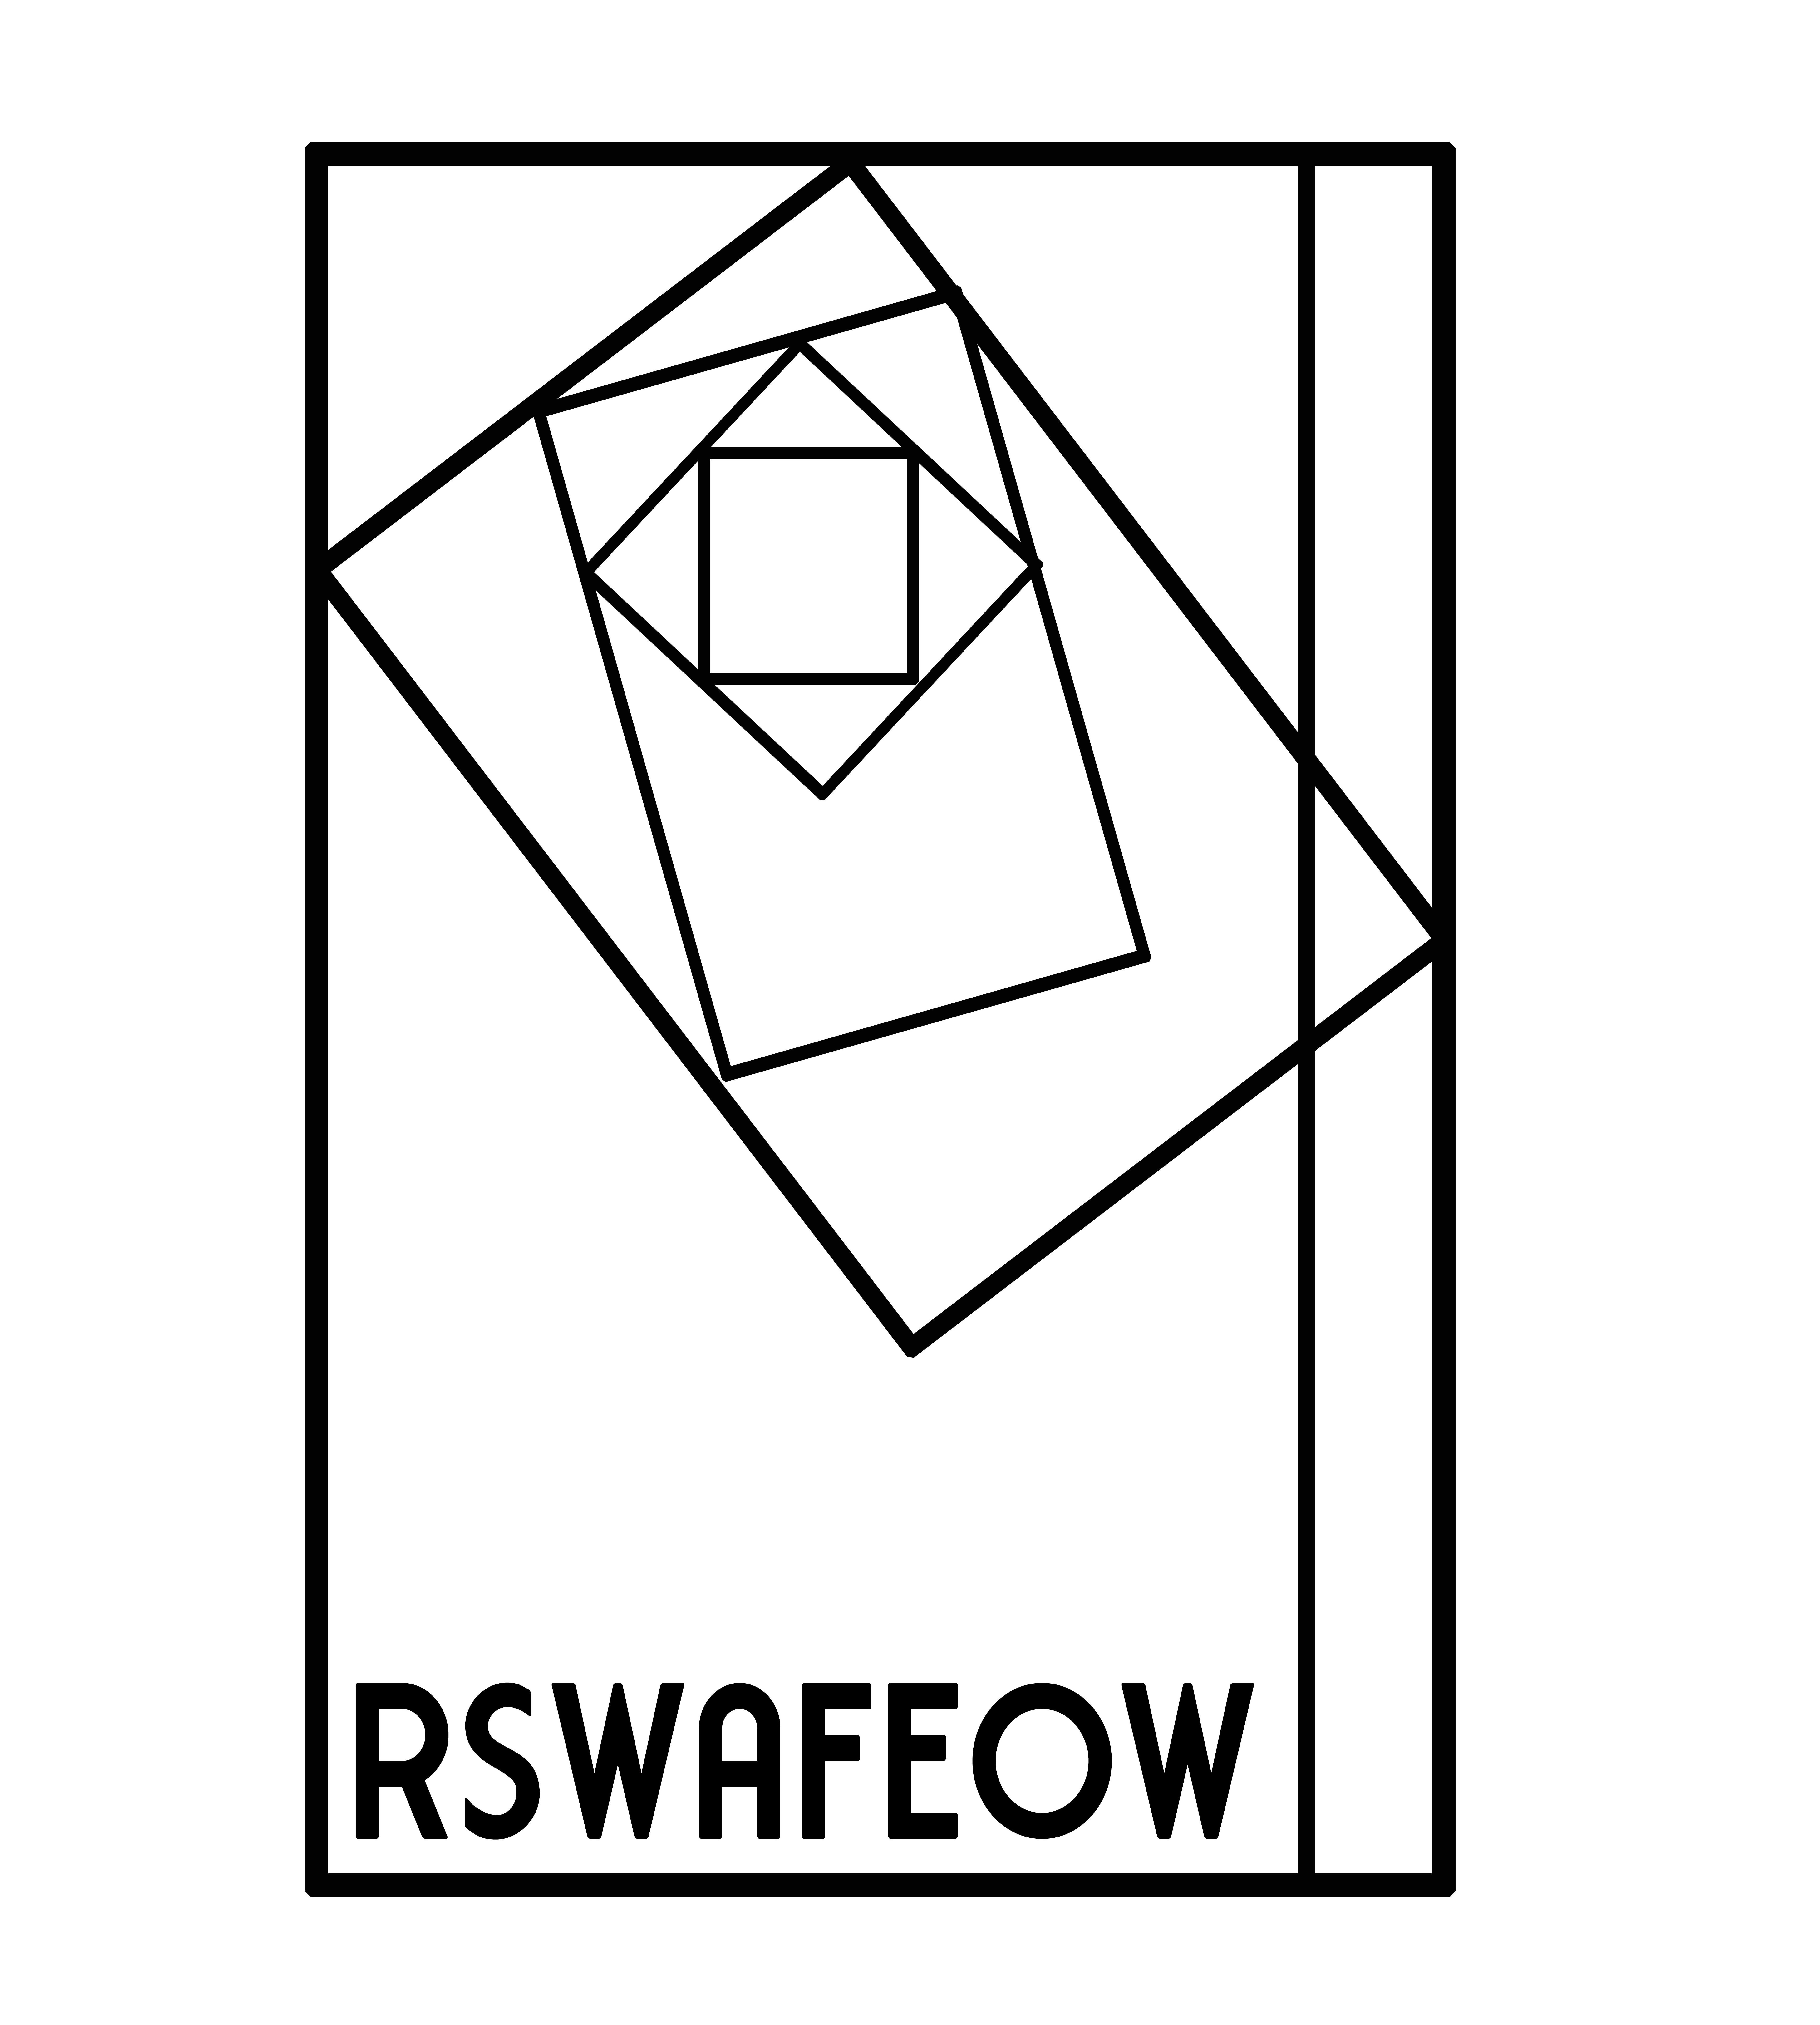  RSWAFEOW